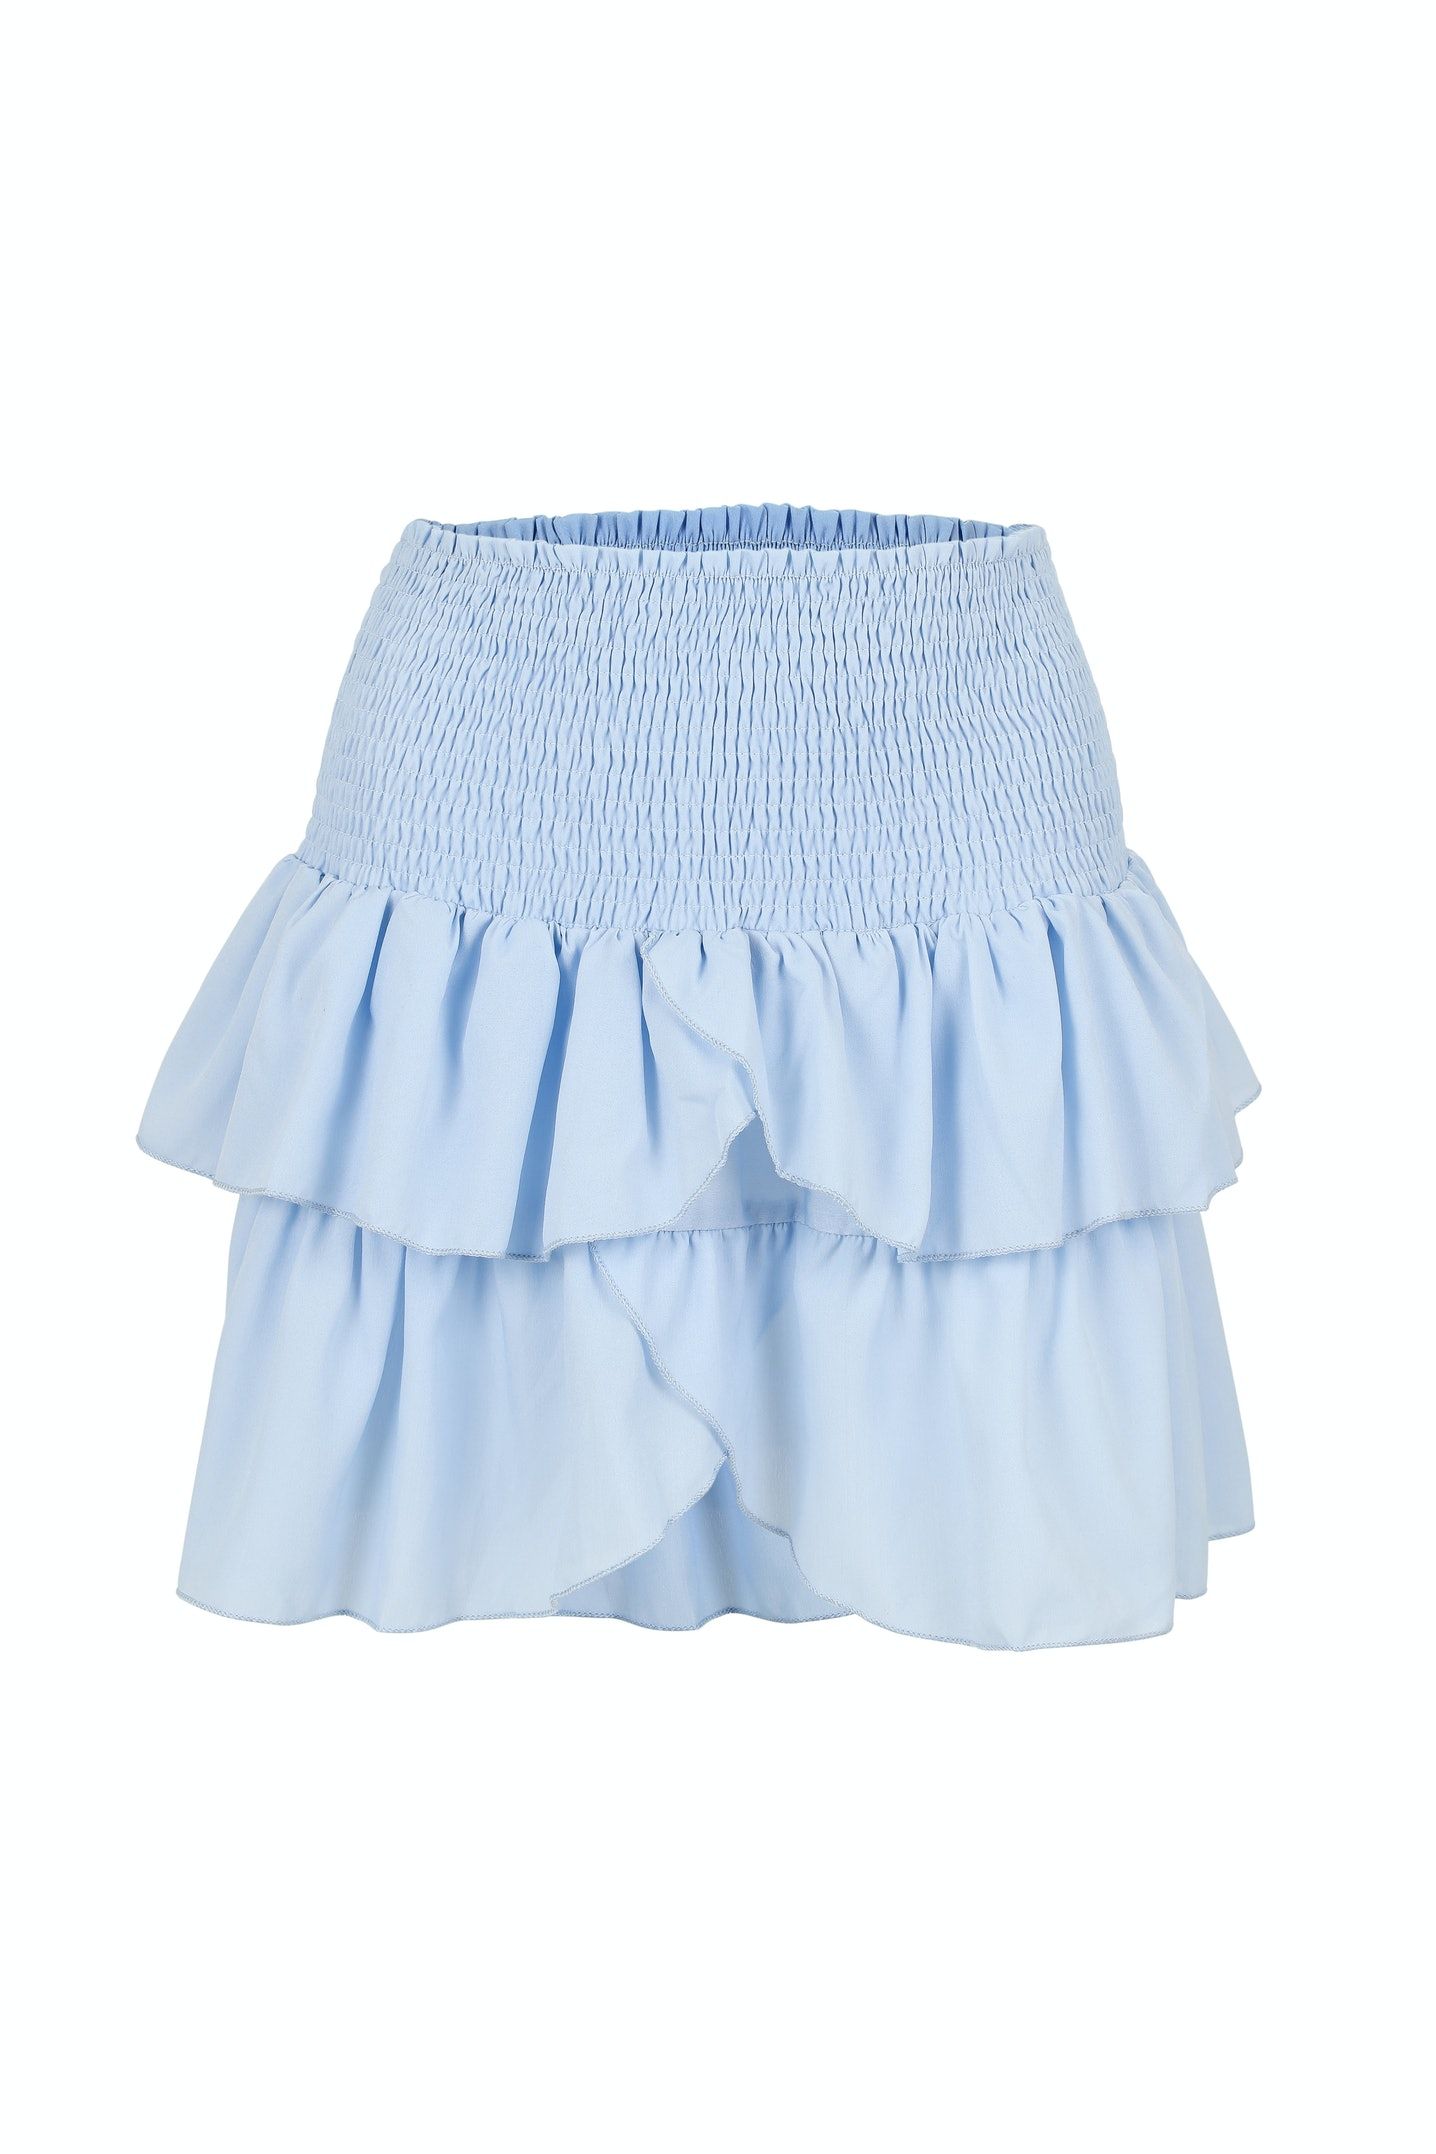 Carin R Skirt - Light Blue